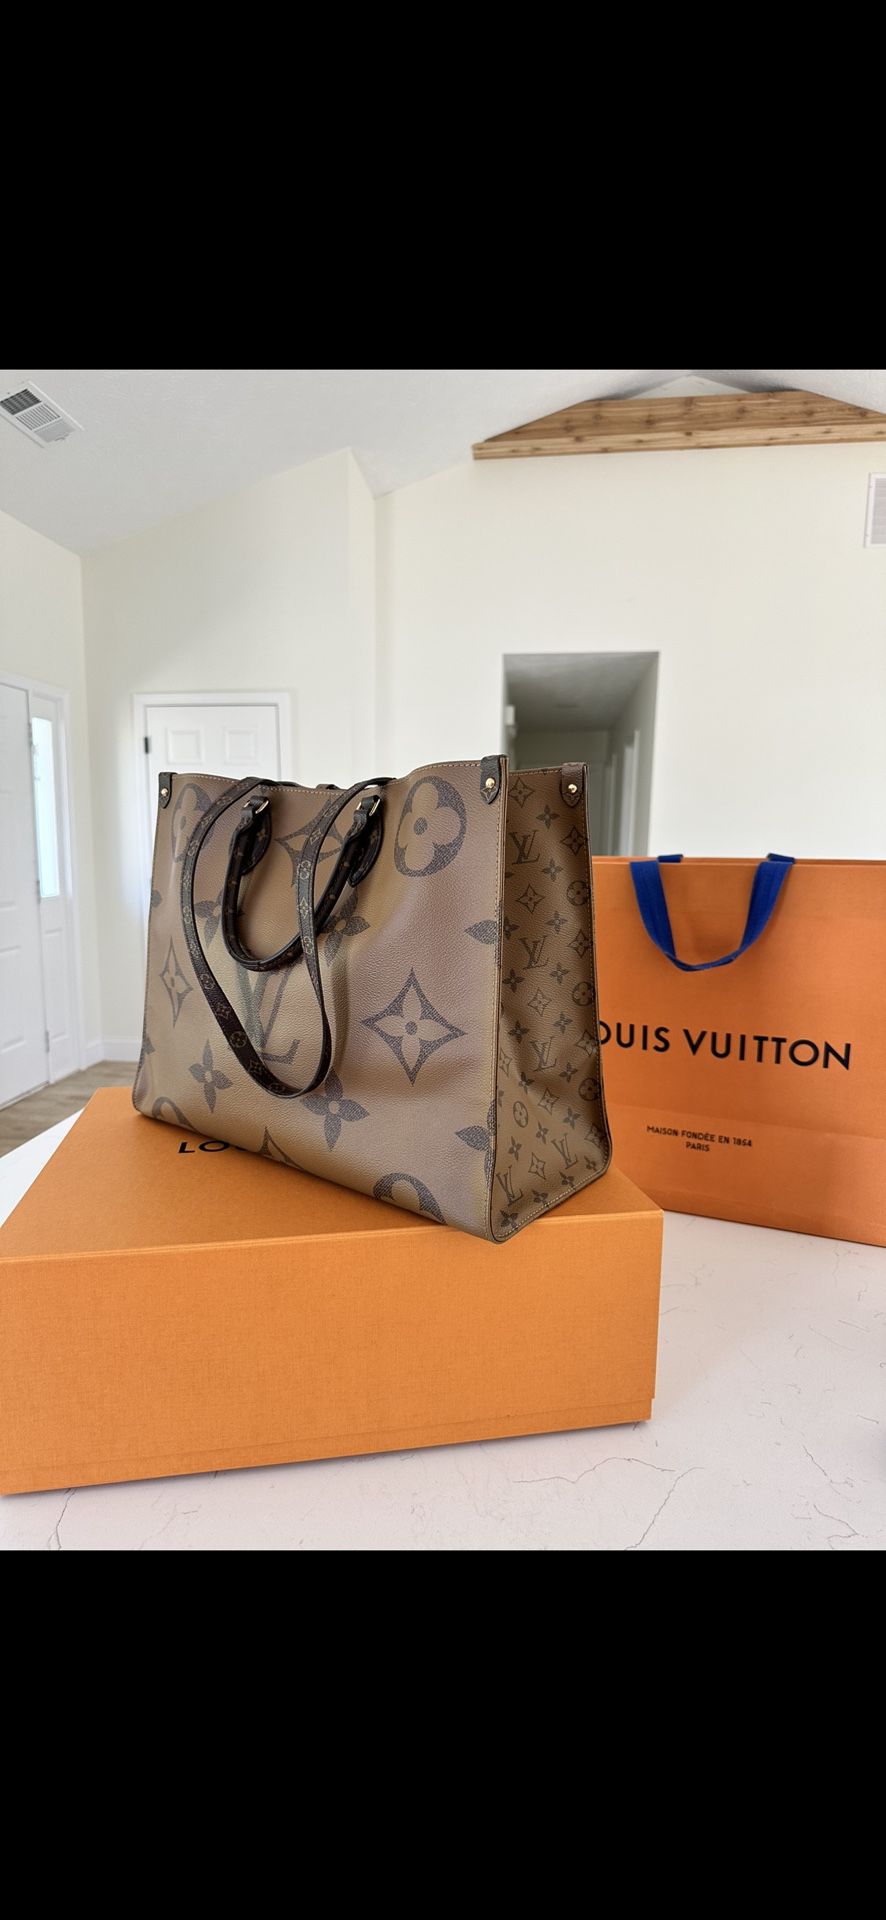 Vintage Louis Vuitton Book Bag for Sale in Lawrenceville, GA - OfferUp